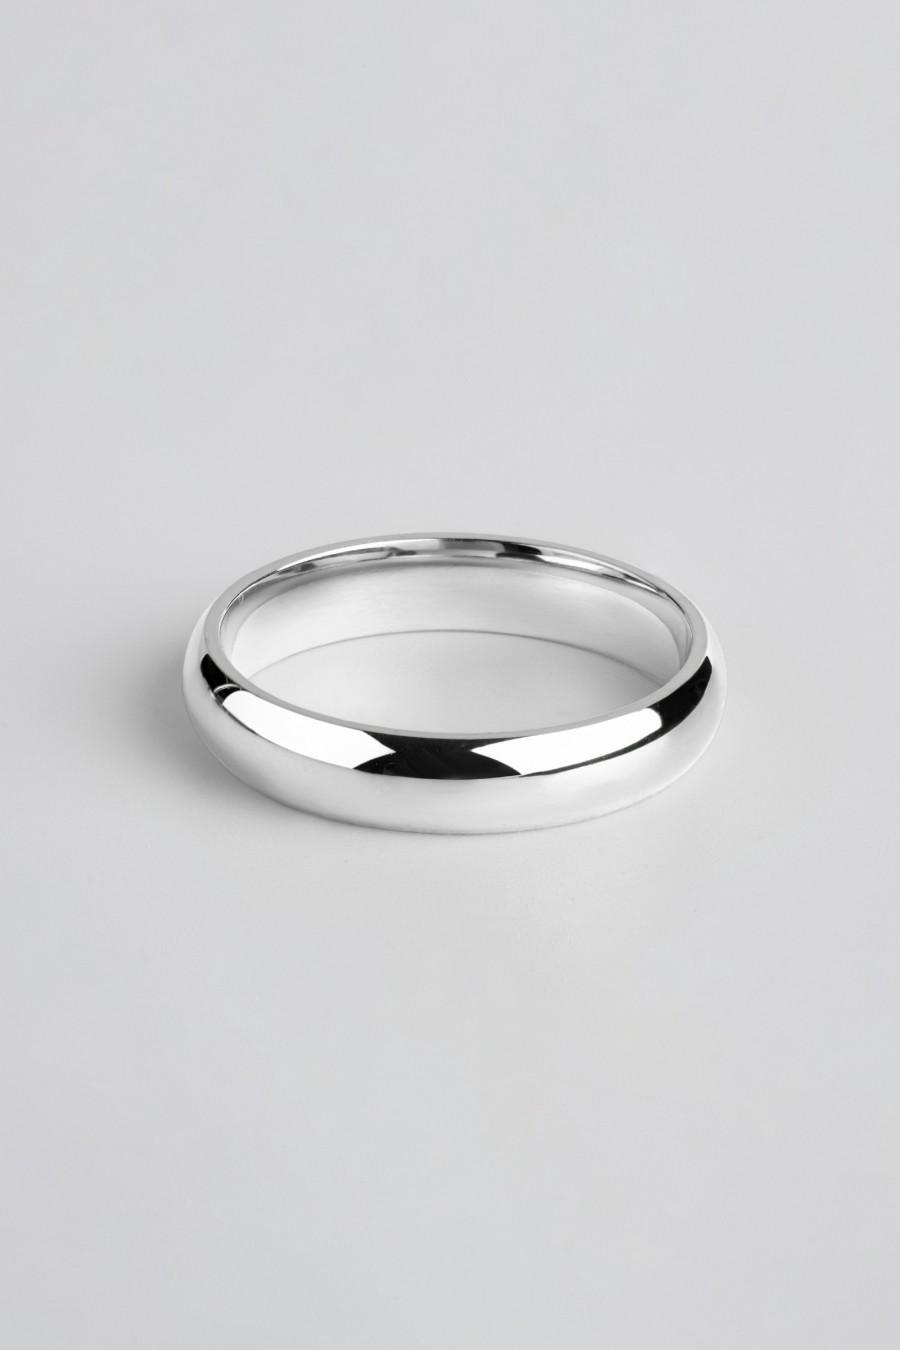 زفاف - 14k White Gold Band - CLASSIC DOME / Polished / Comfort Fit / Men's Women's Wedding Ring / Simple Wedding Ring